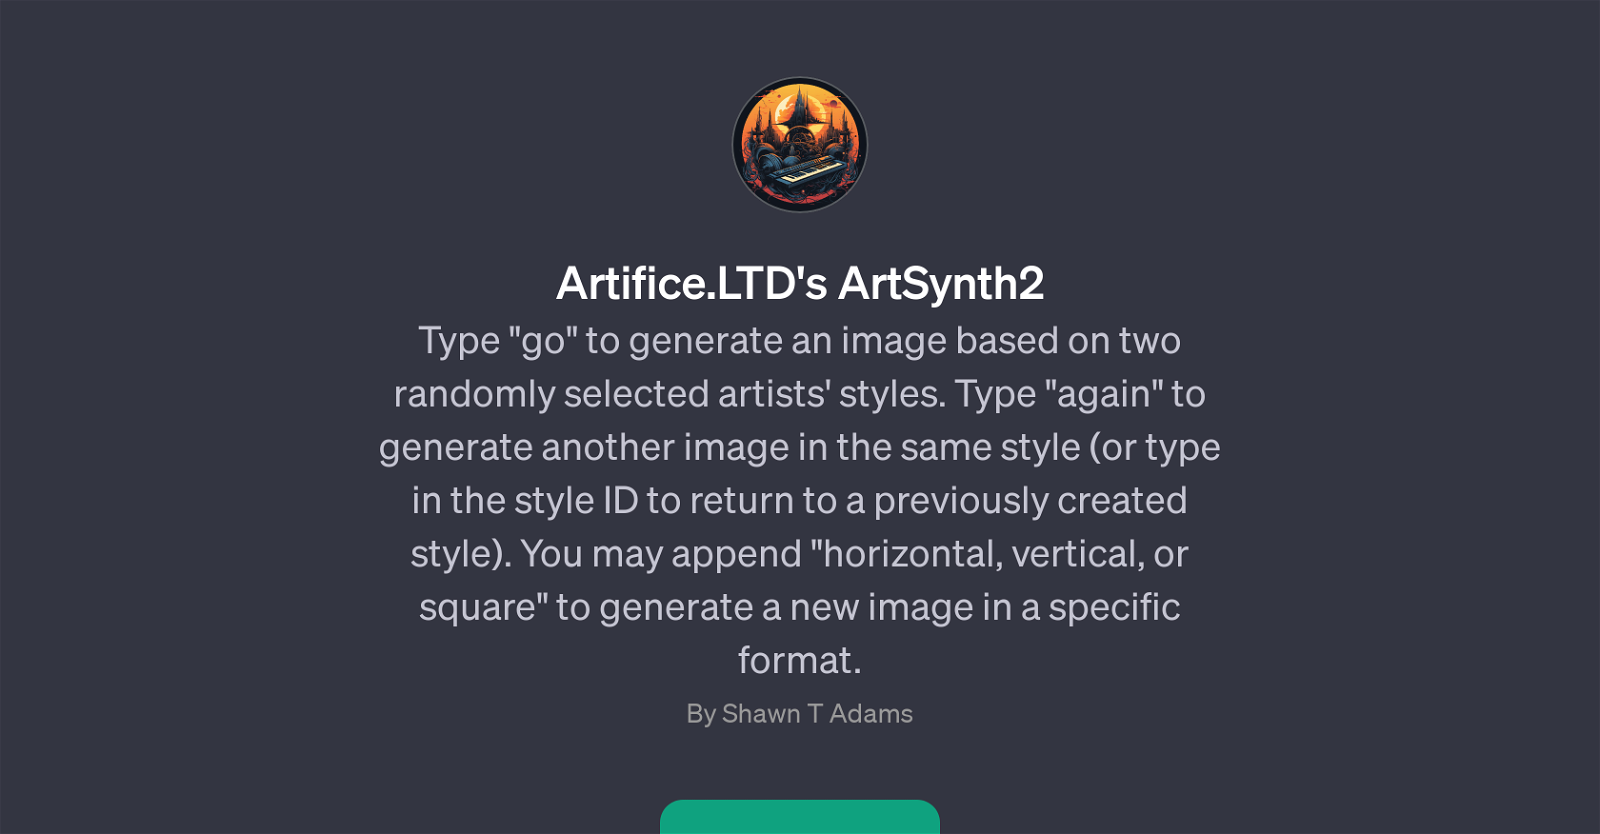 Artifice.LTD's ArtSynth2 website